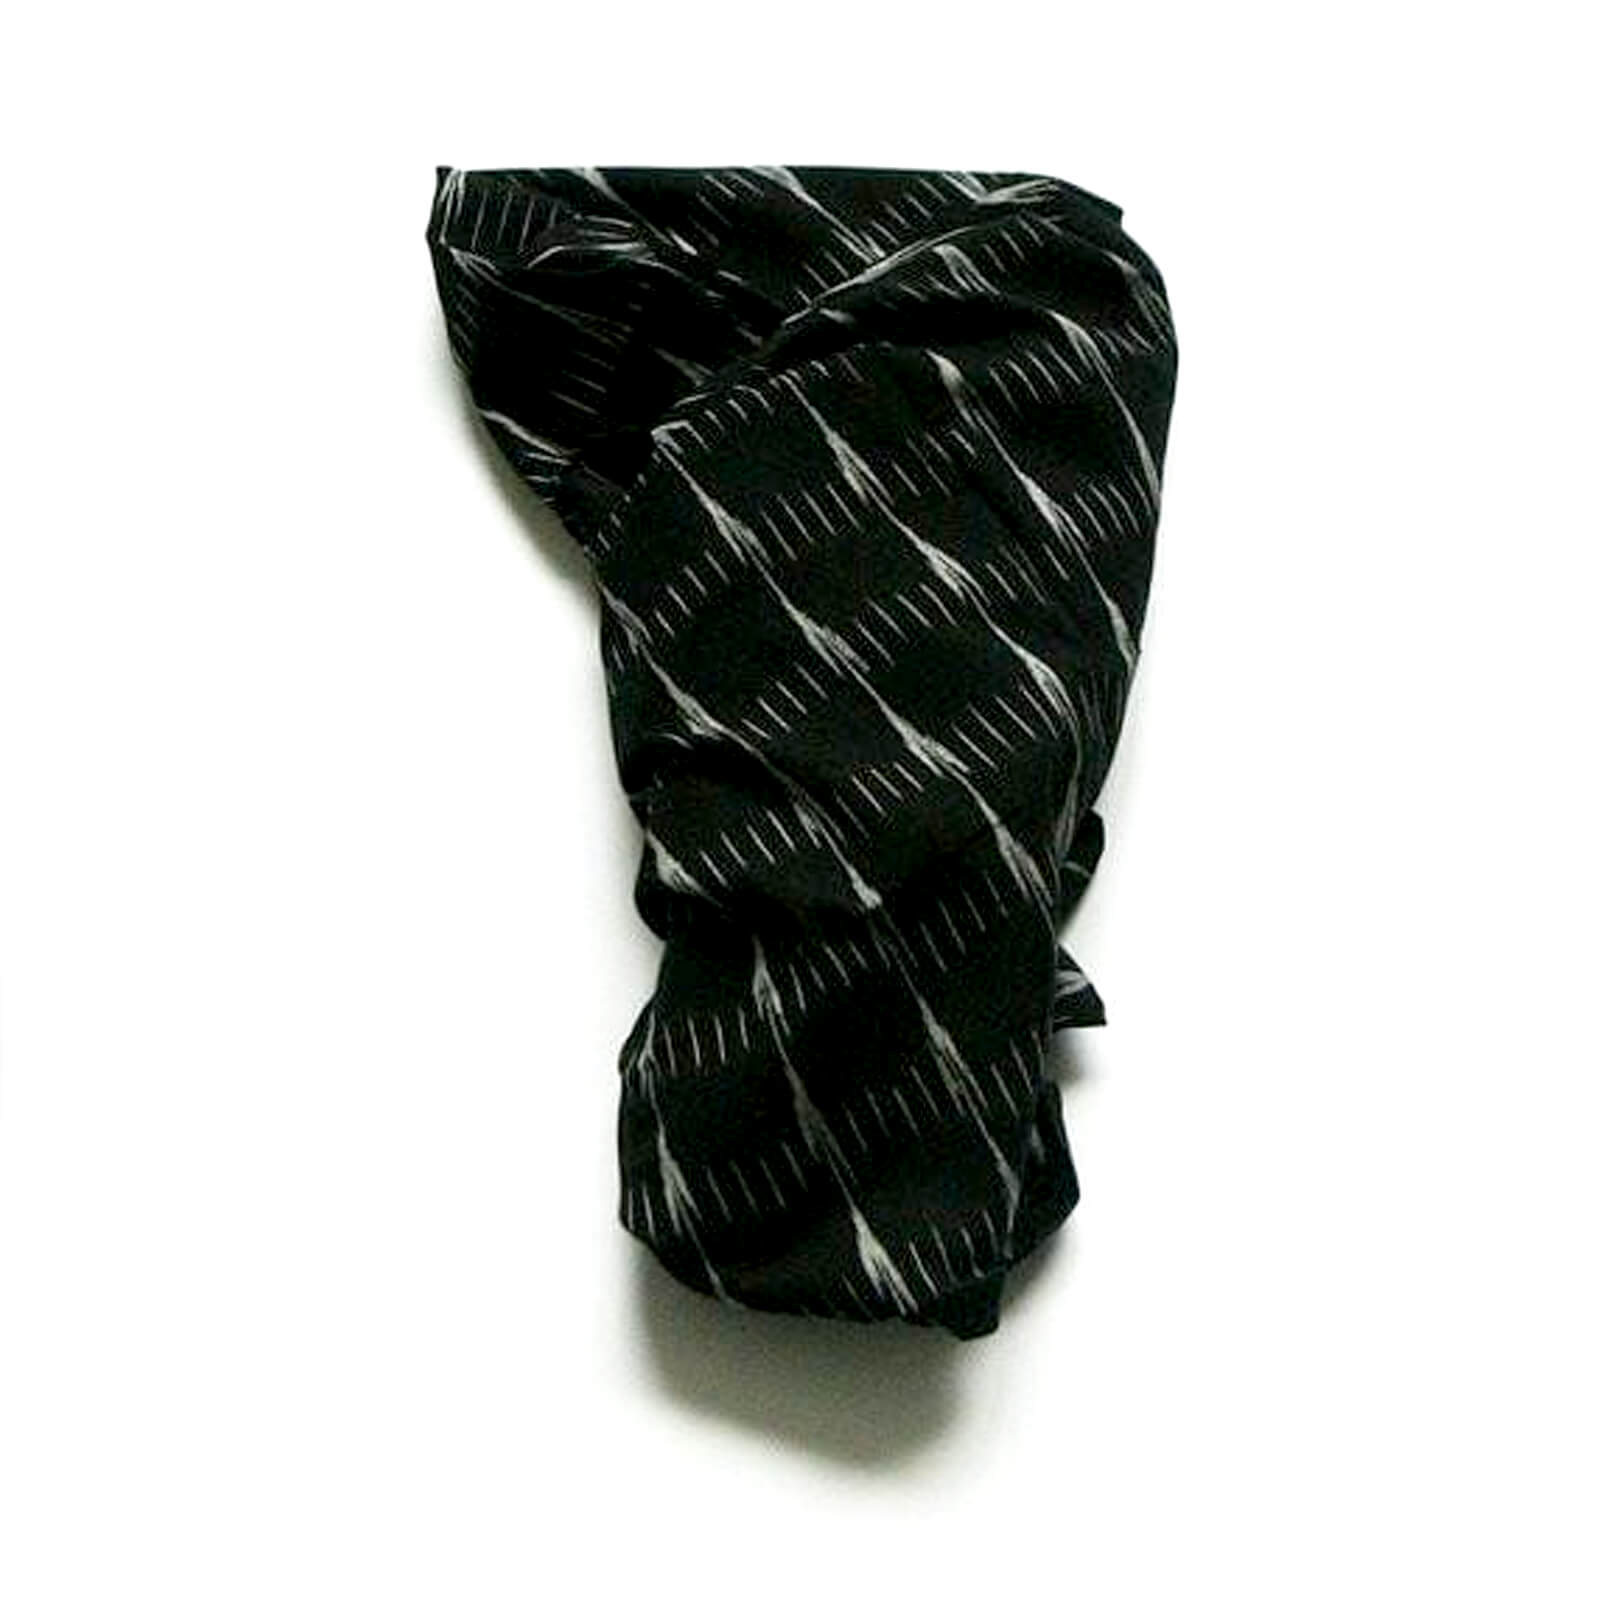 Handmade Cotton Ikat Swaddle Blanket - Black and Light Grey Arrow Stripe